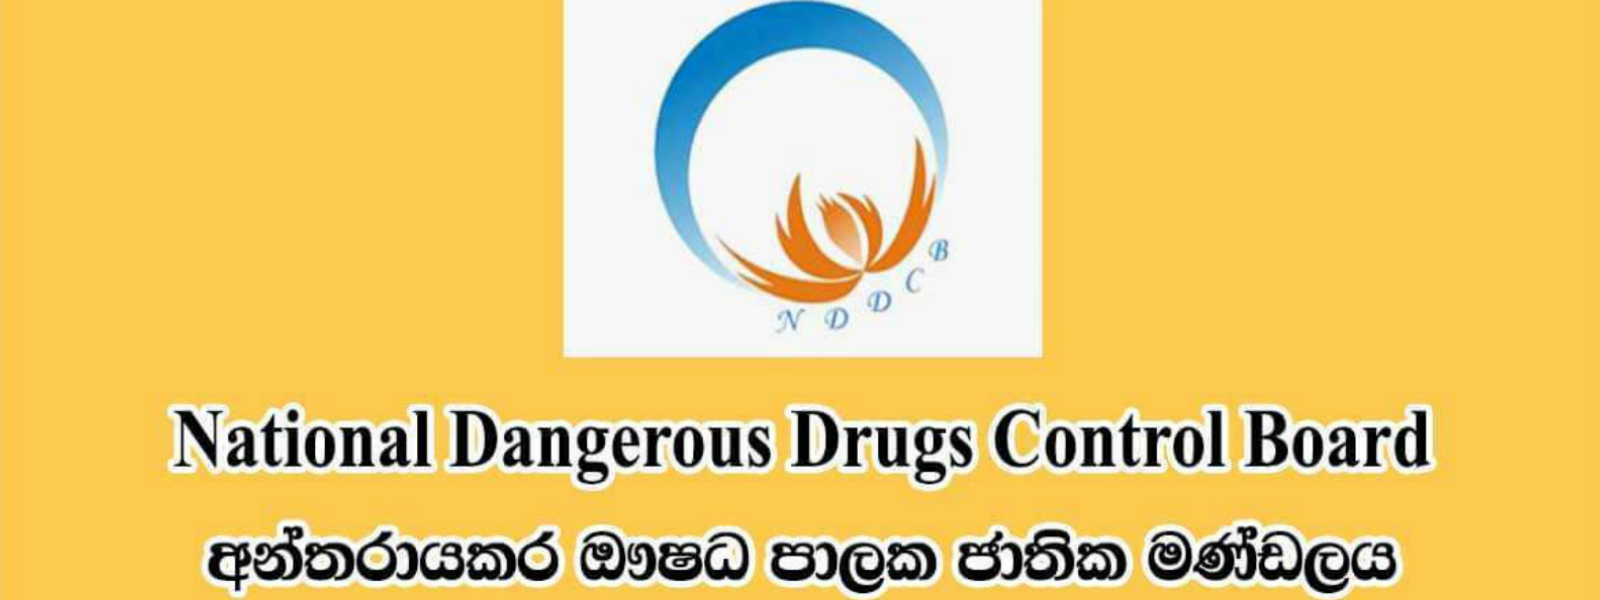 REHABILITATION PROGRAMME FOR RELEASED DRUG ADDICTS